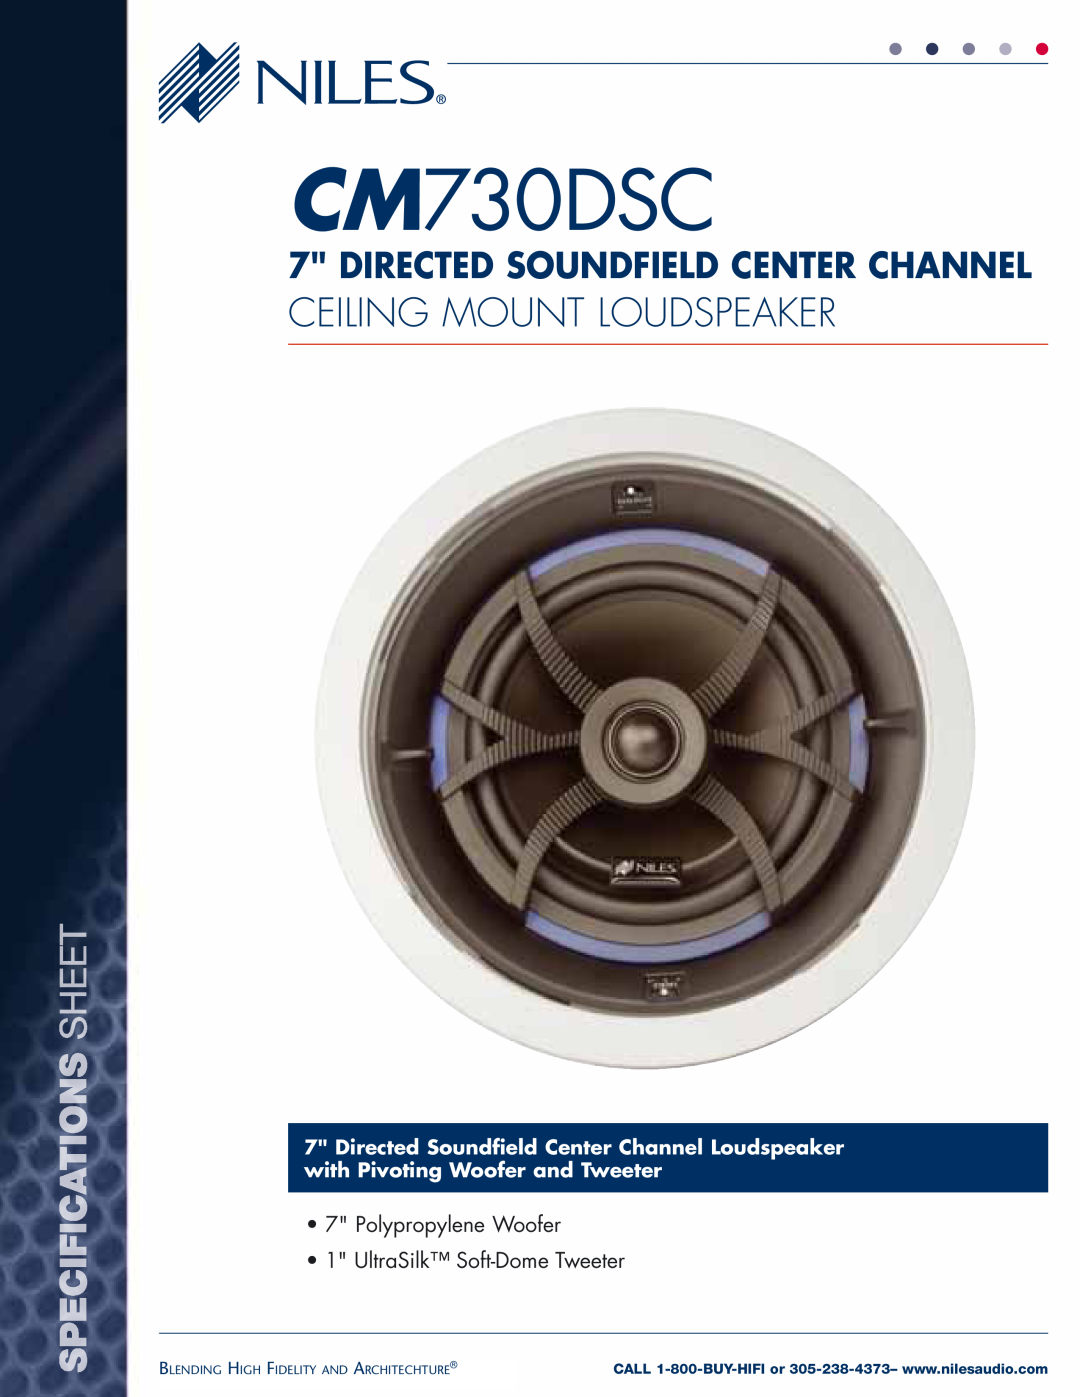 Niles Audio manual CM730DSC, Ceiling Mount Loudspeaker, Directed Soundfield Center Channel, Polypropylene Woofer 